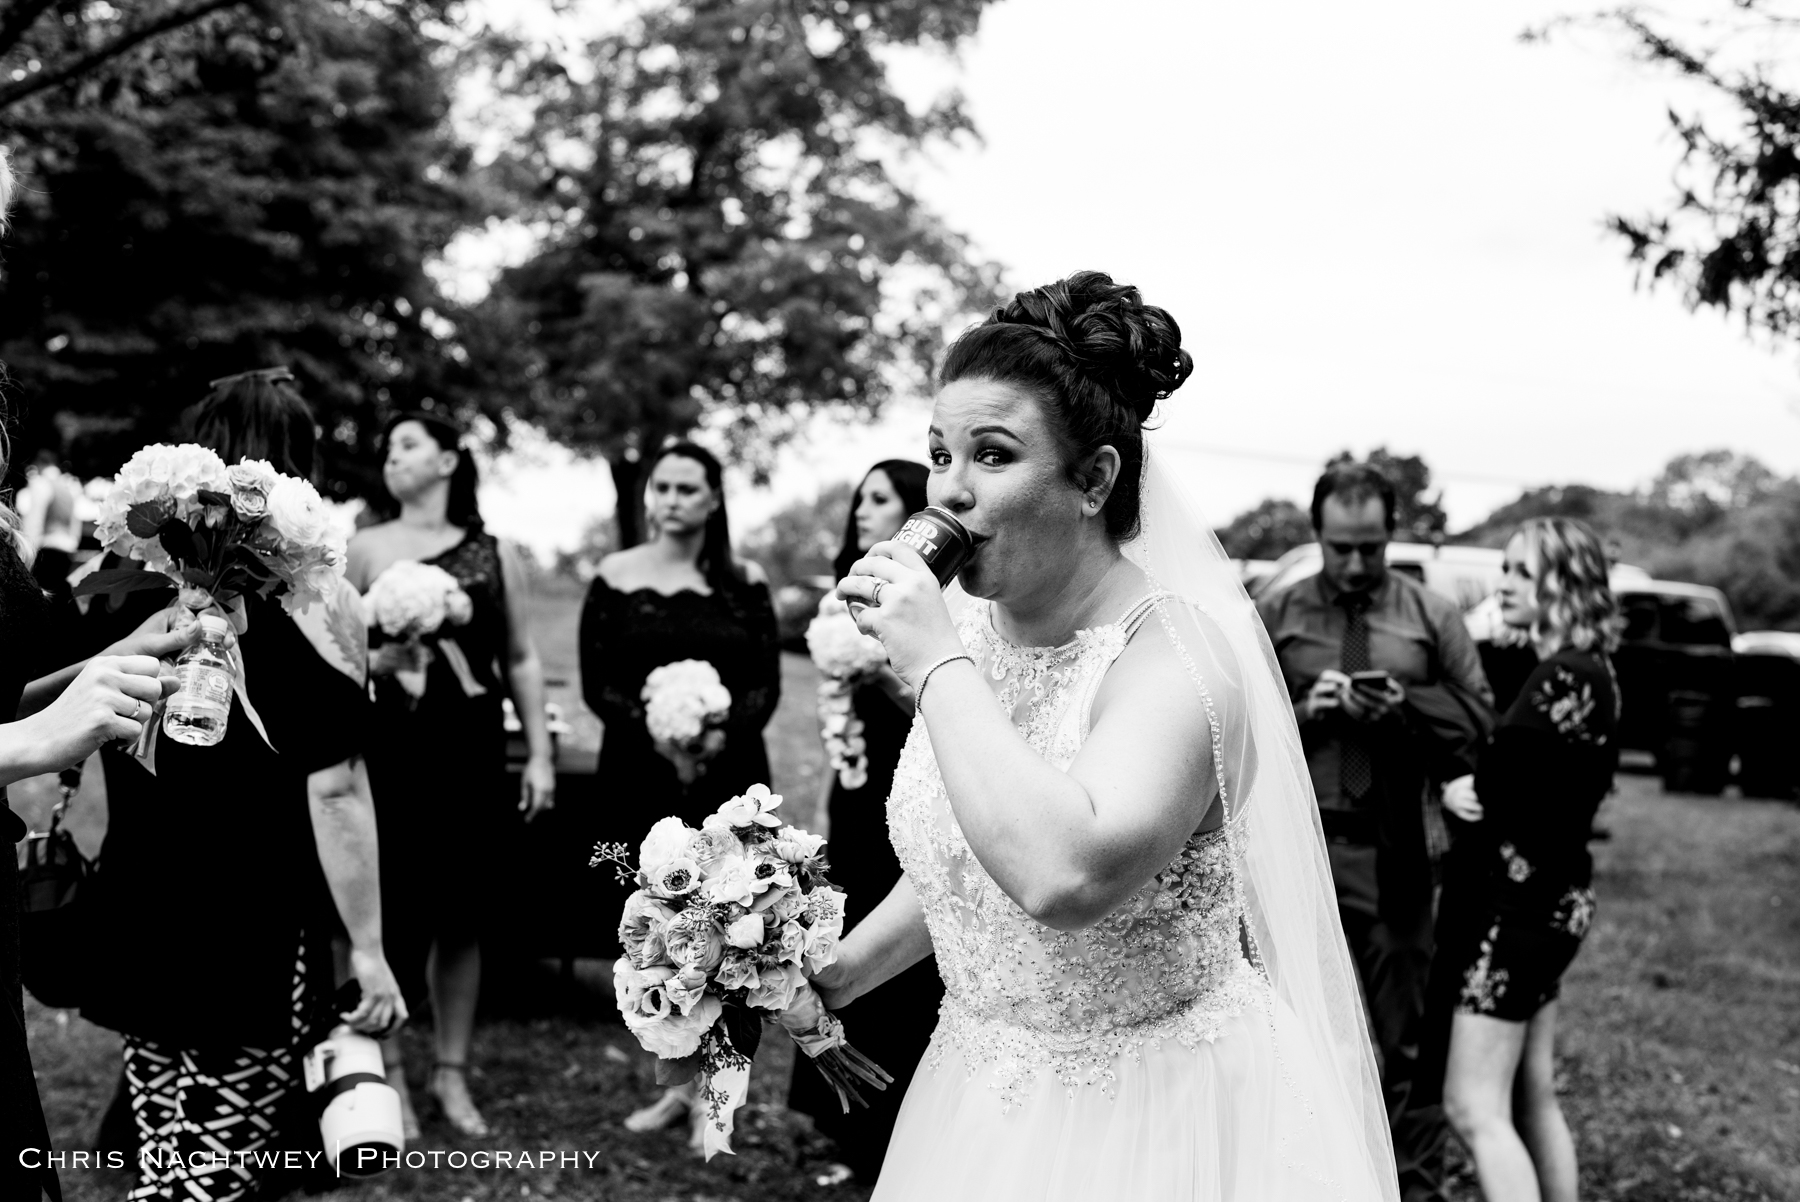 wedding-photographers-connecticut-affordable-chris-nachtwey-photography-2019-13.jpg